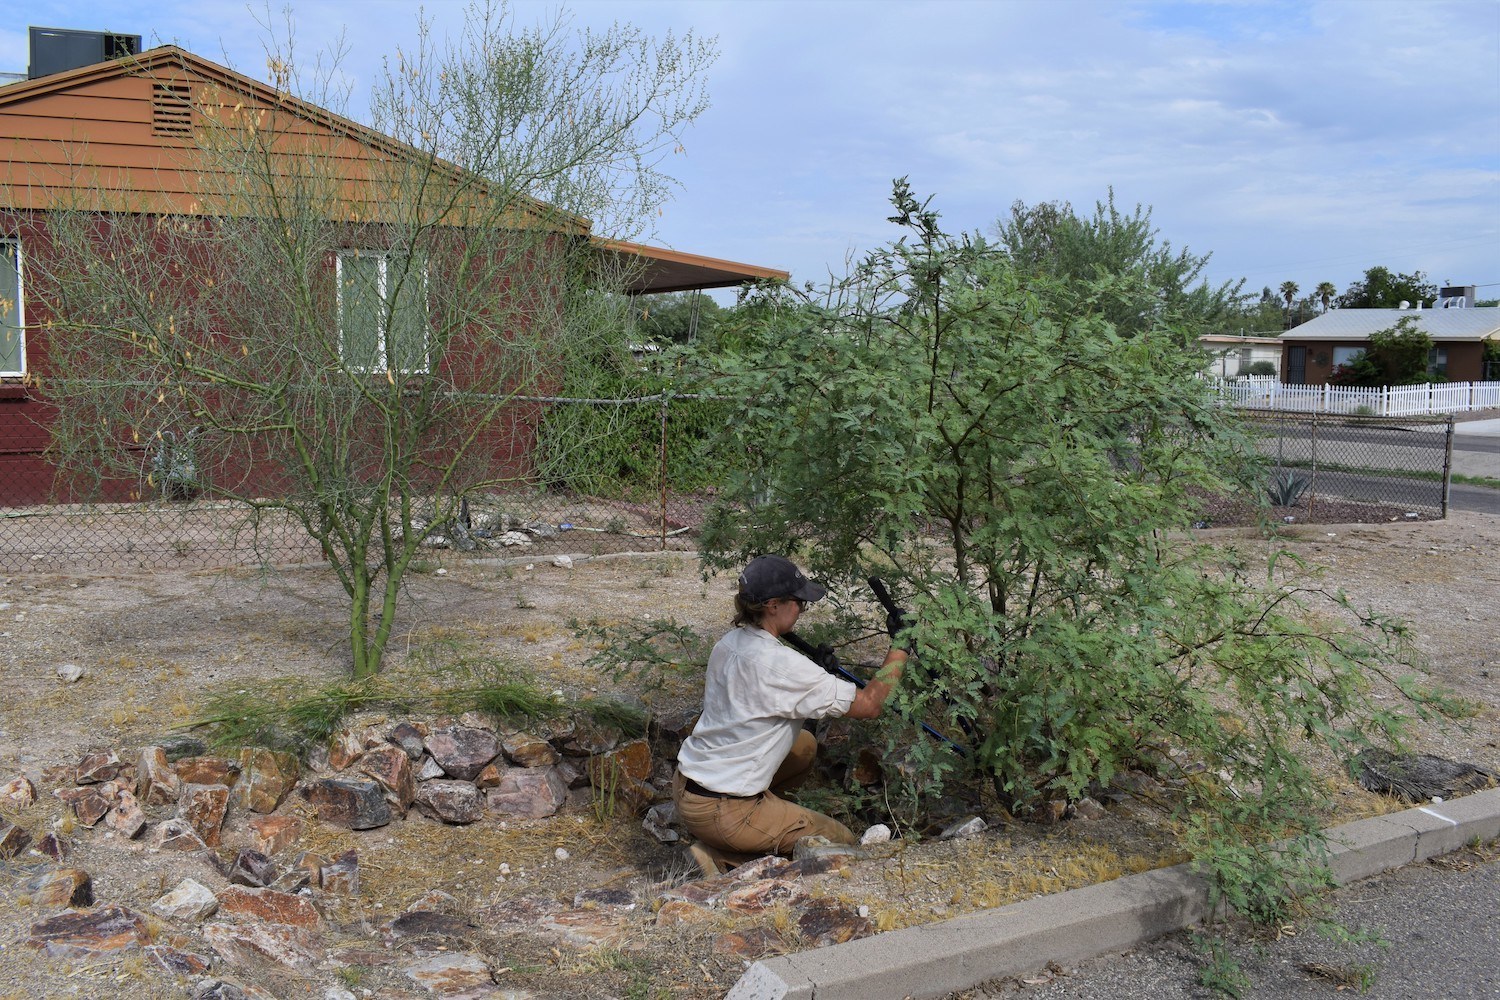 Madeline Ryder planting mesquite in an in-ground rainwater harvesting basin in the Sugar Hill neighborhood of Tucson, Arizona. December 2020